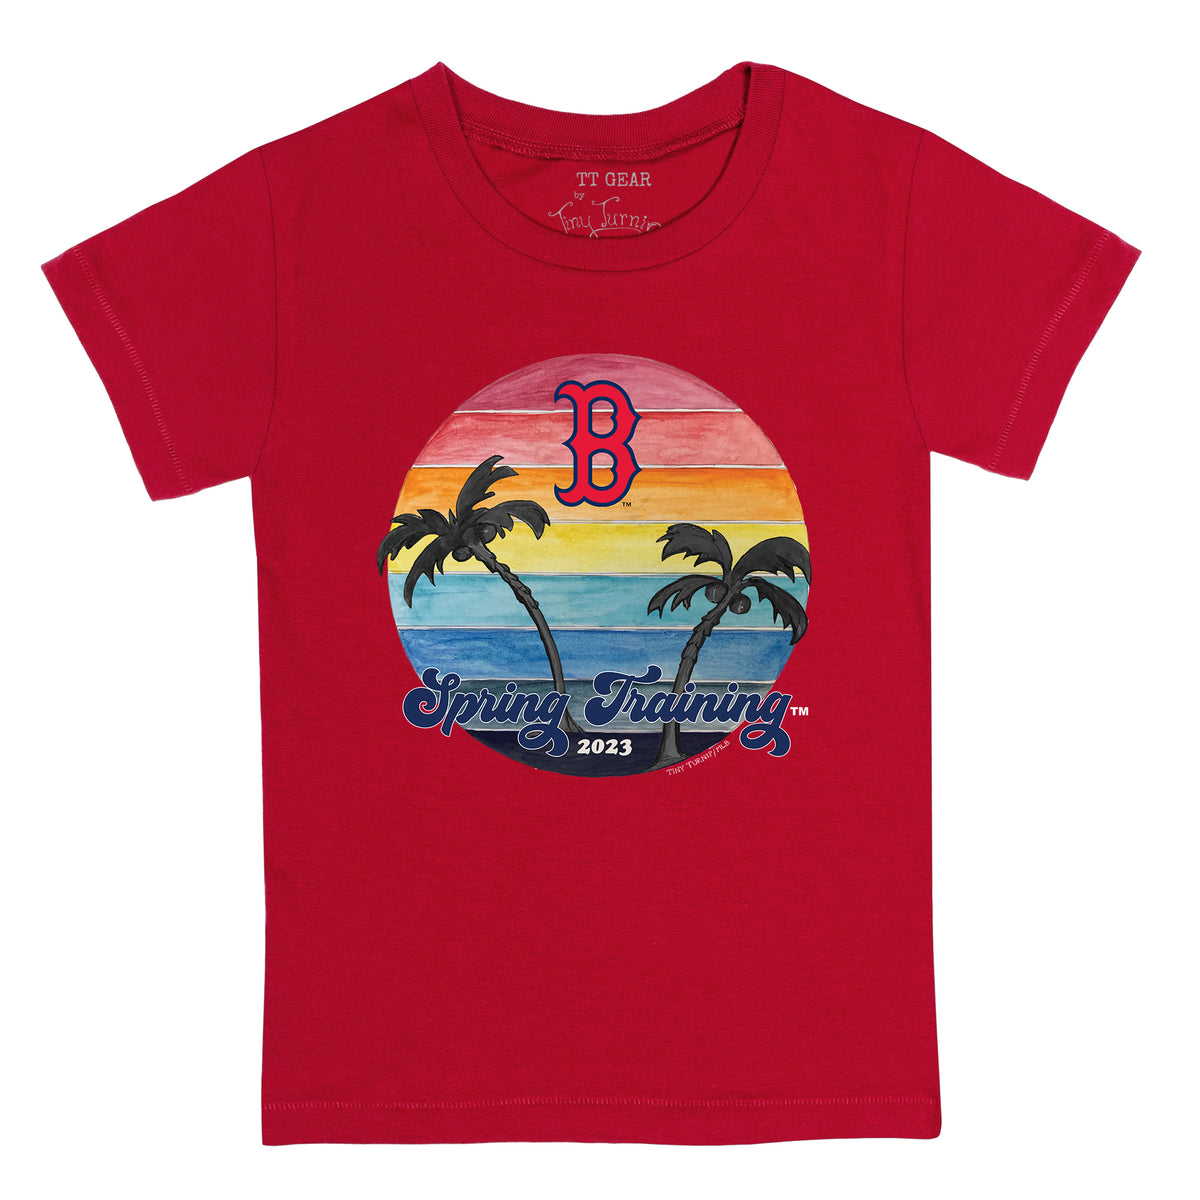 MLB Boston Red Sox Girls' Crew Neck T-Shirt - XS